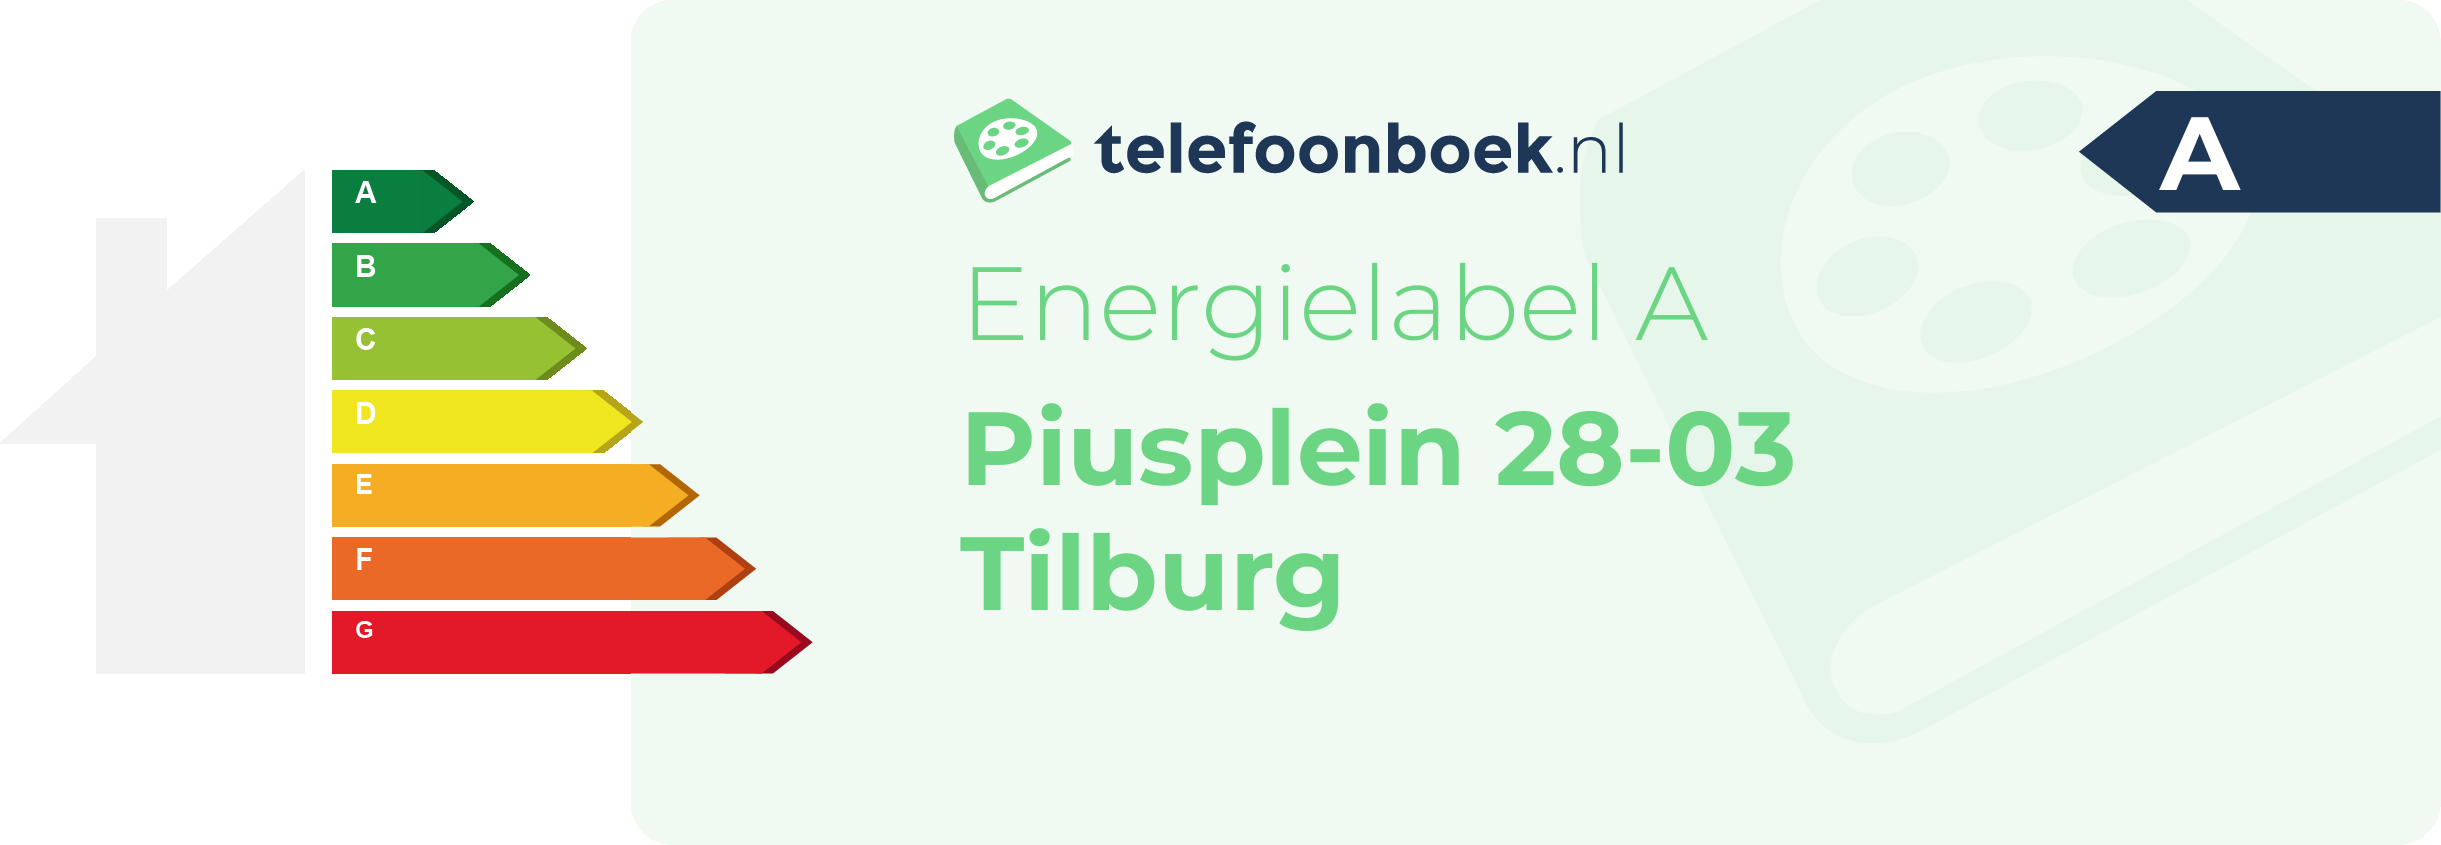 Energielabel Piusplein 28-03 Tilburg